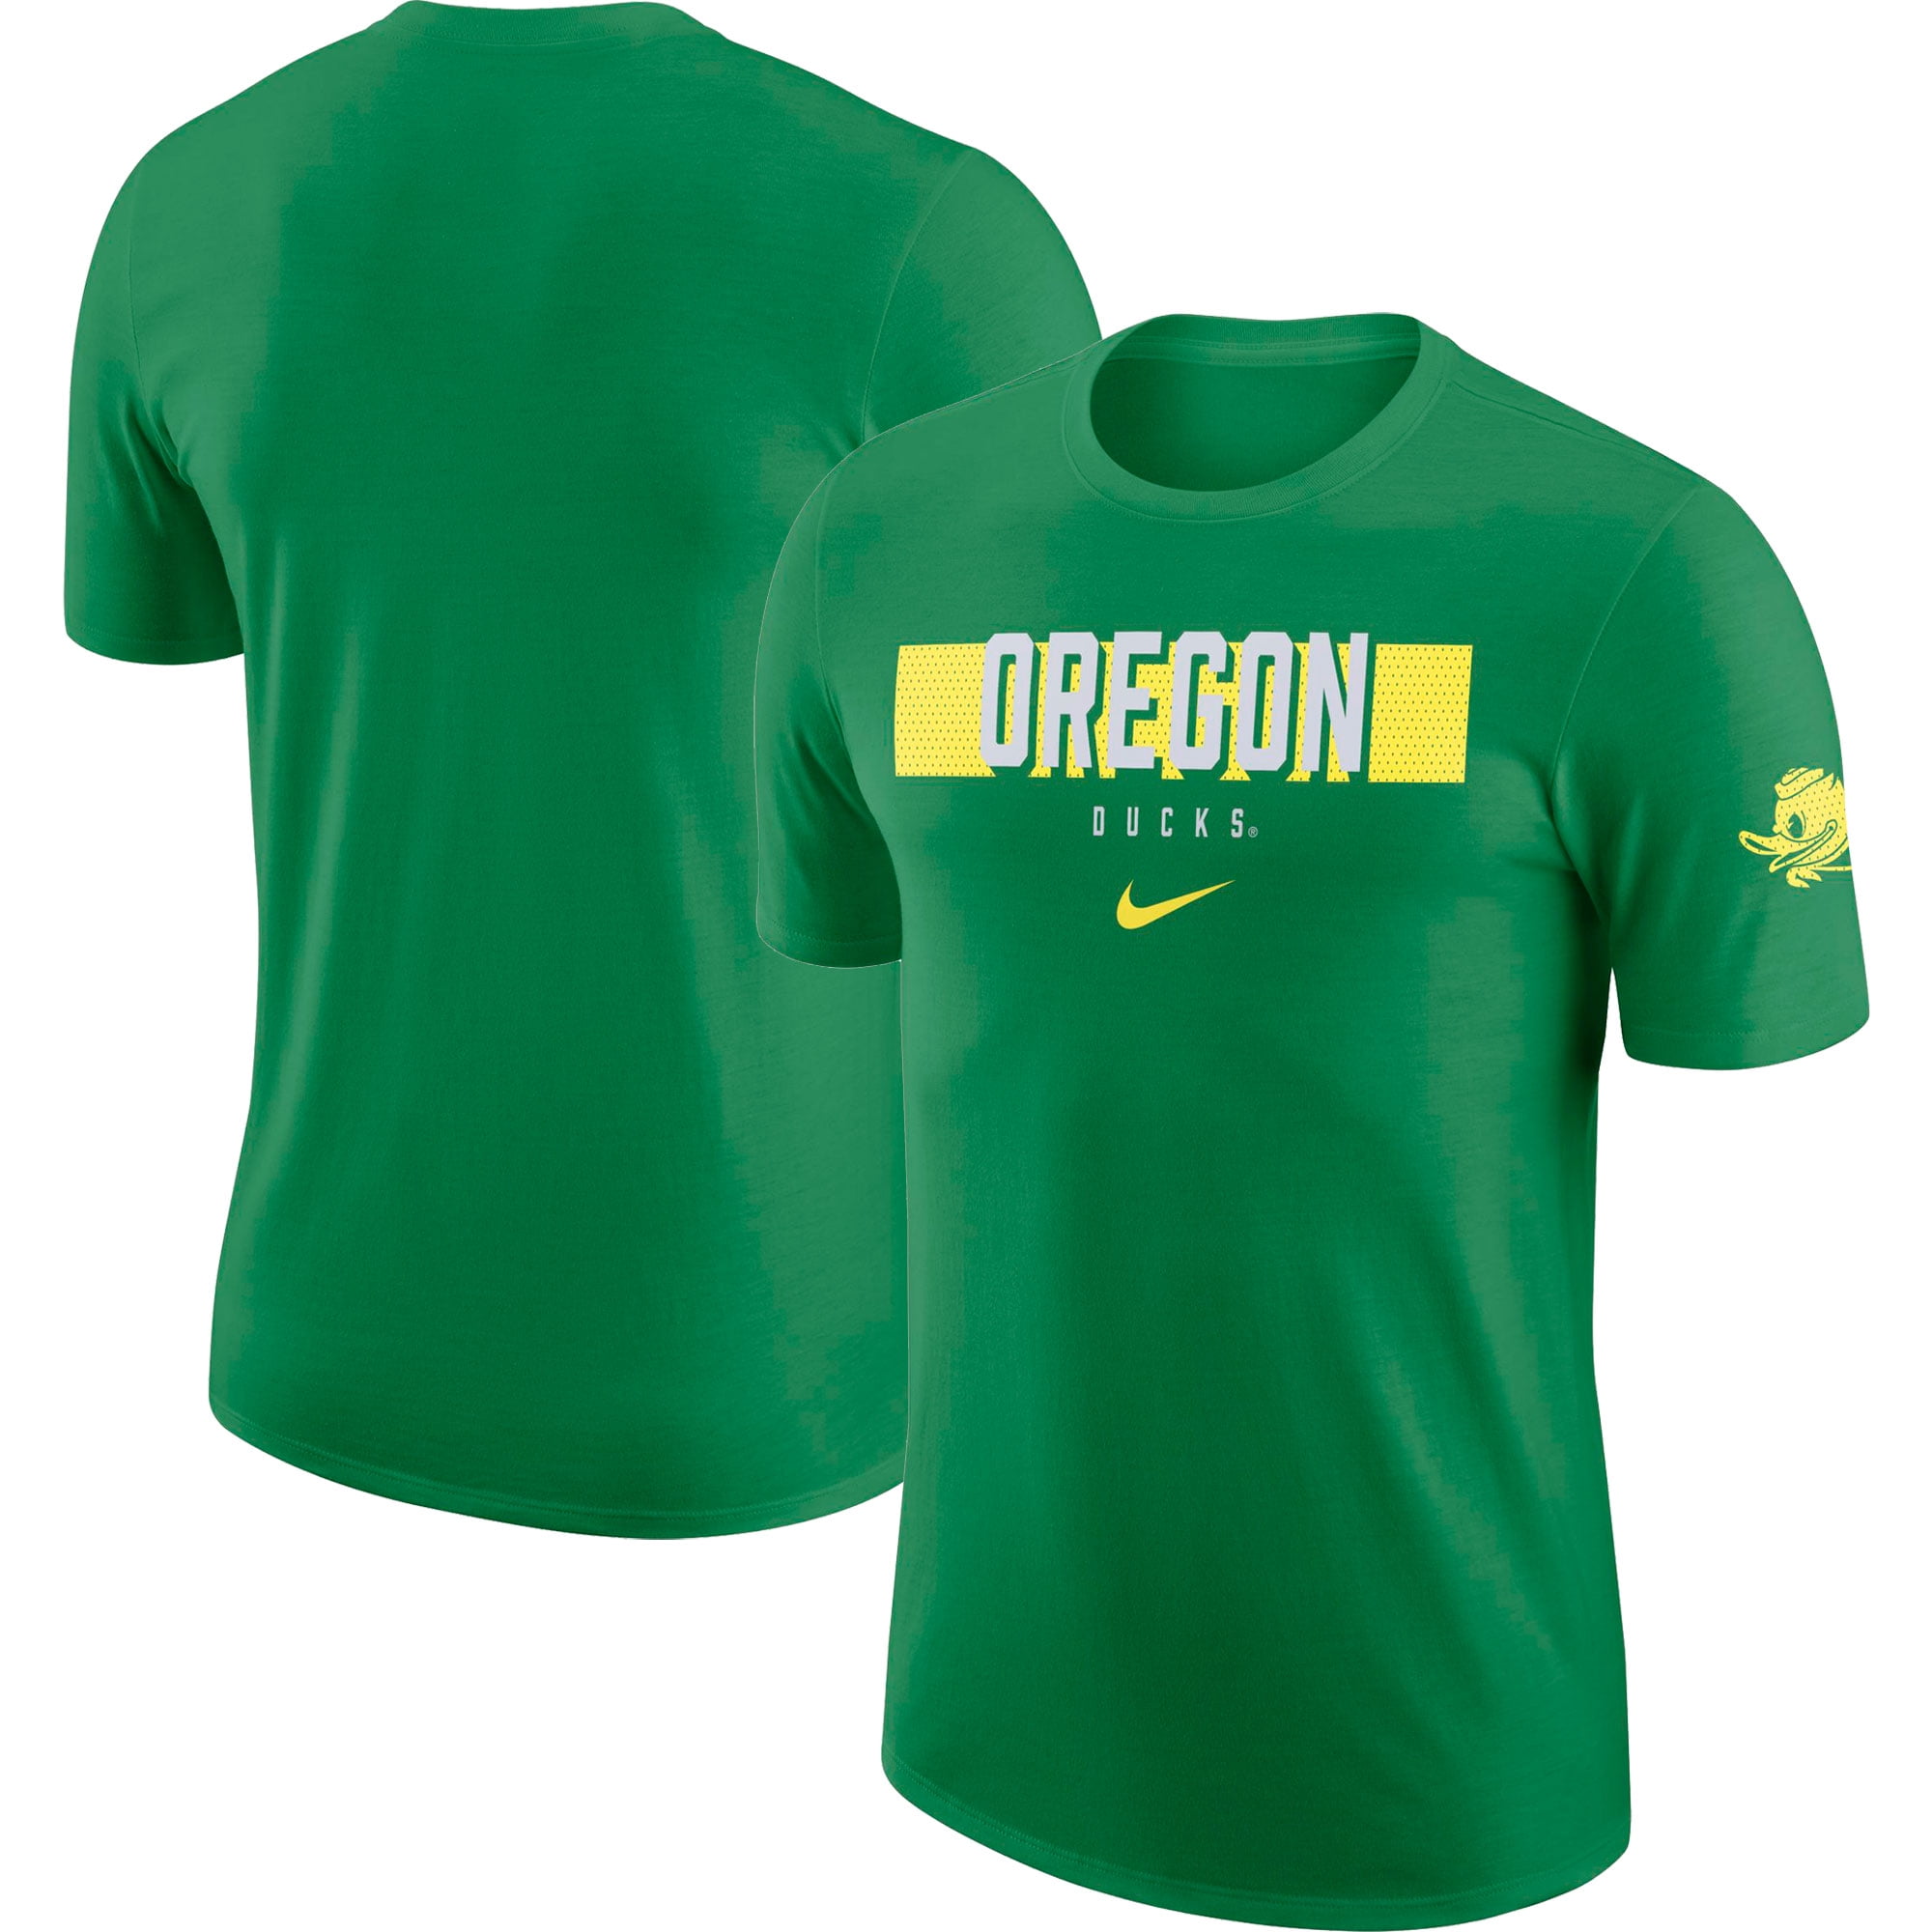 Men's Nike Green Oregon Ducks Campus Gametime T-Shirt - Walmart.com